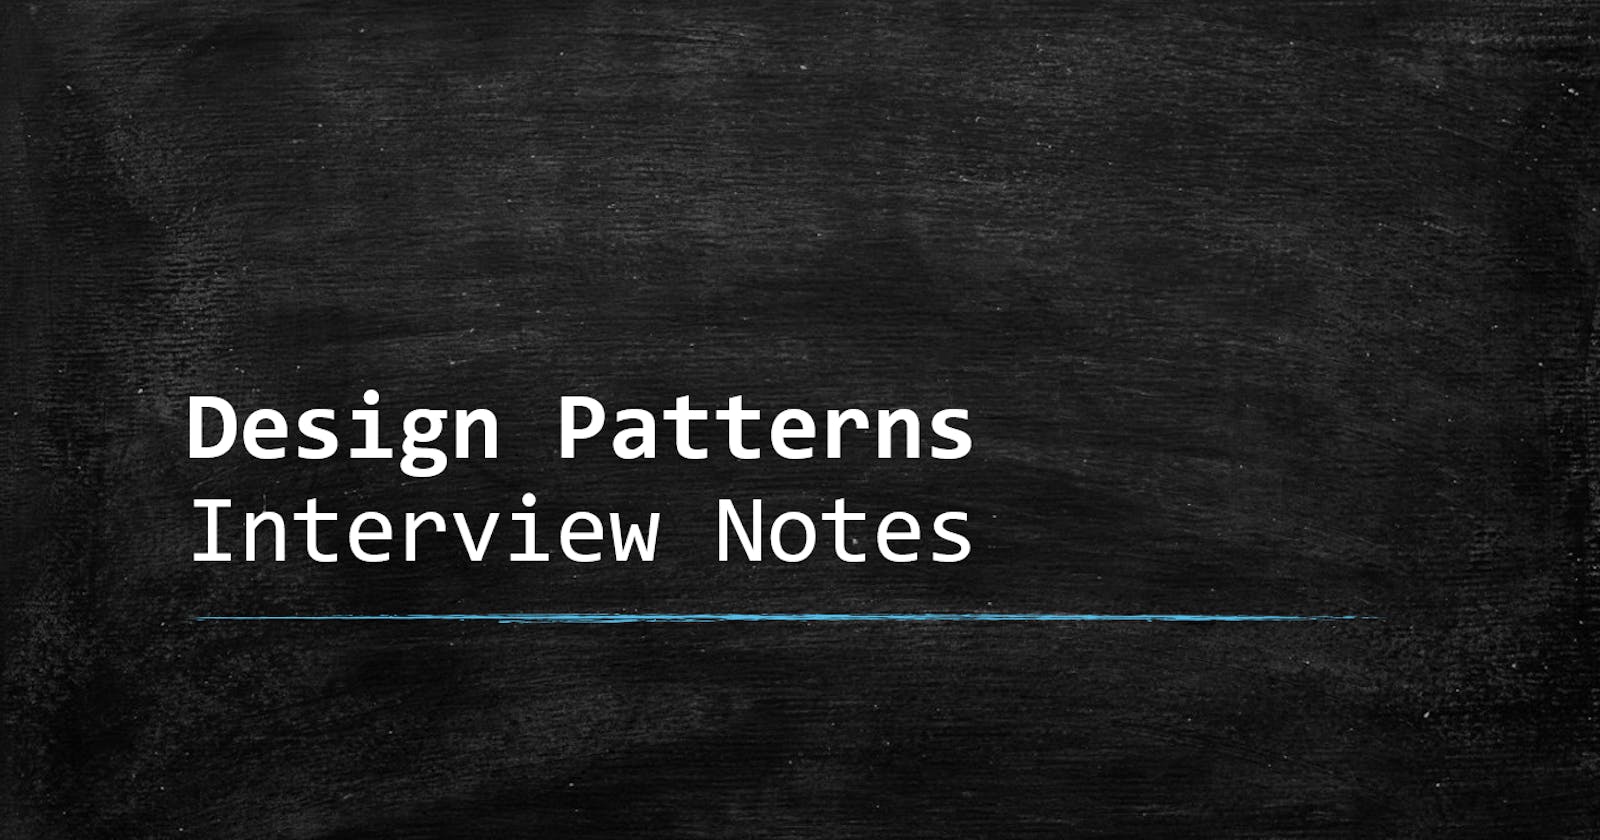 Design Patterns Interview Notes